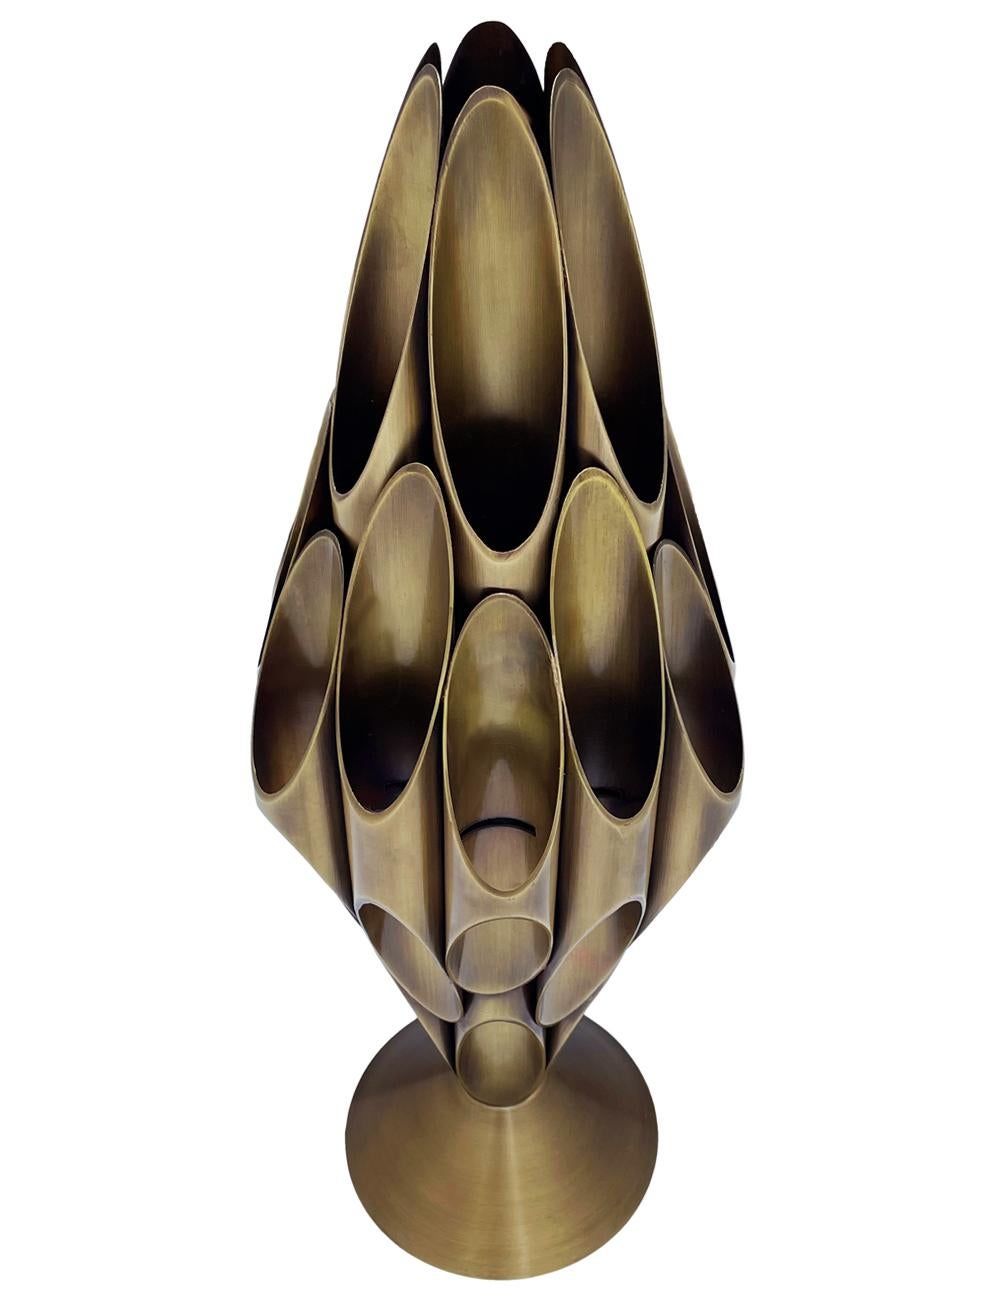 Hollywood Regency Tubular Table Sculpture Brass Accent Lamp after Mastercraft 1